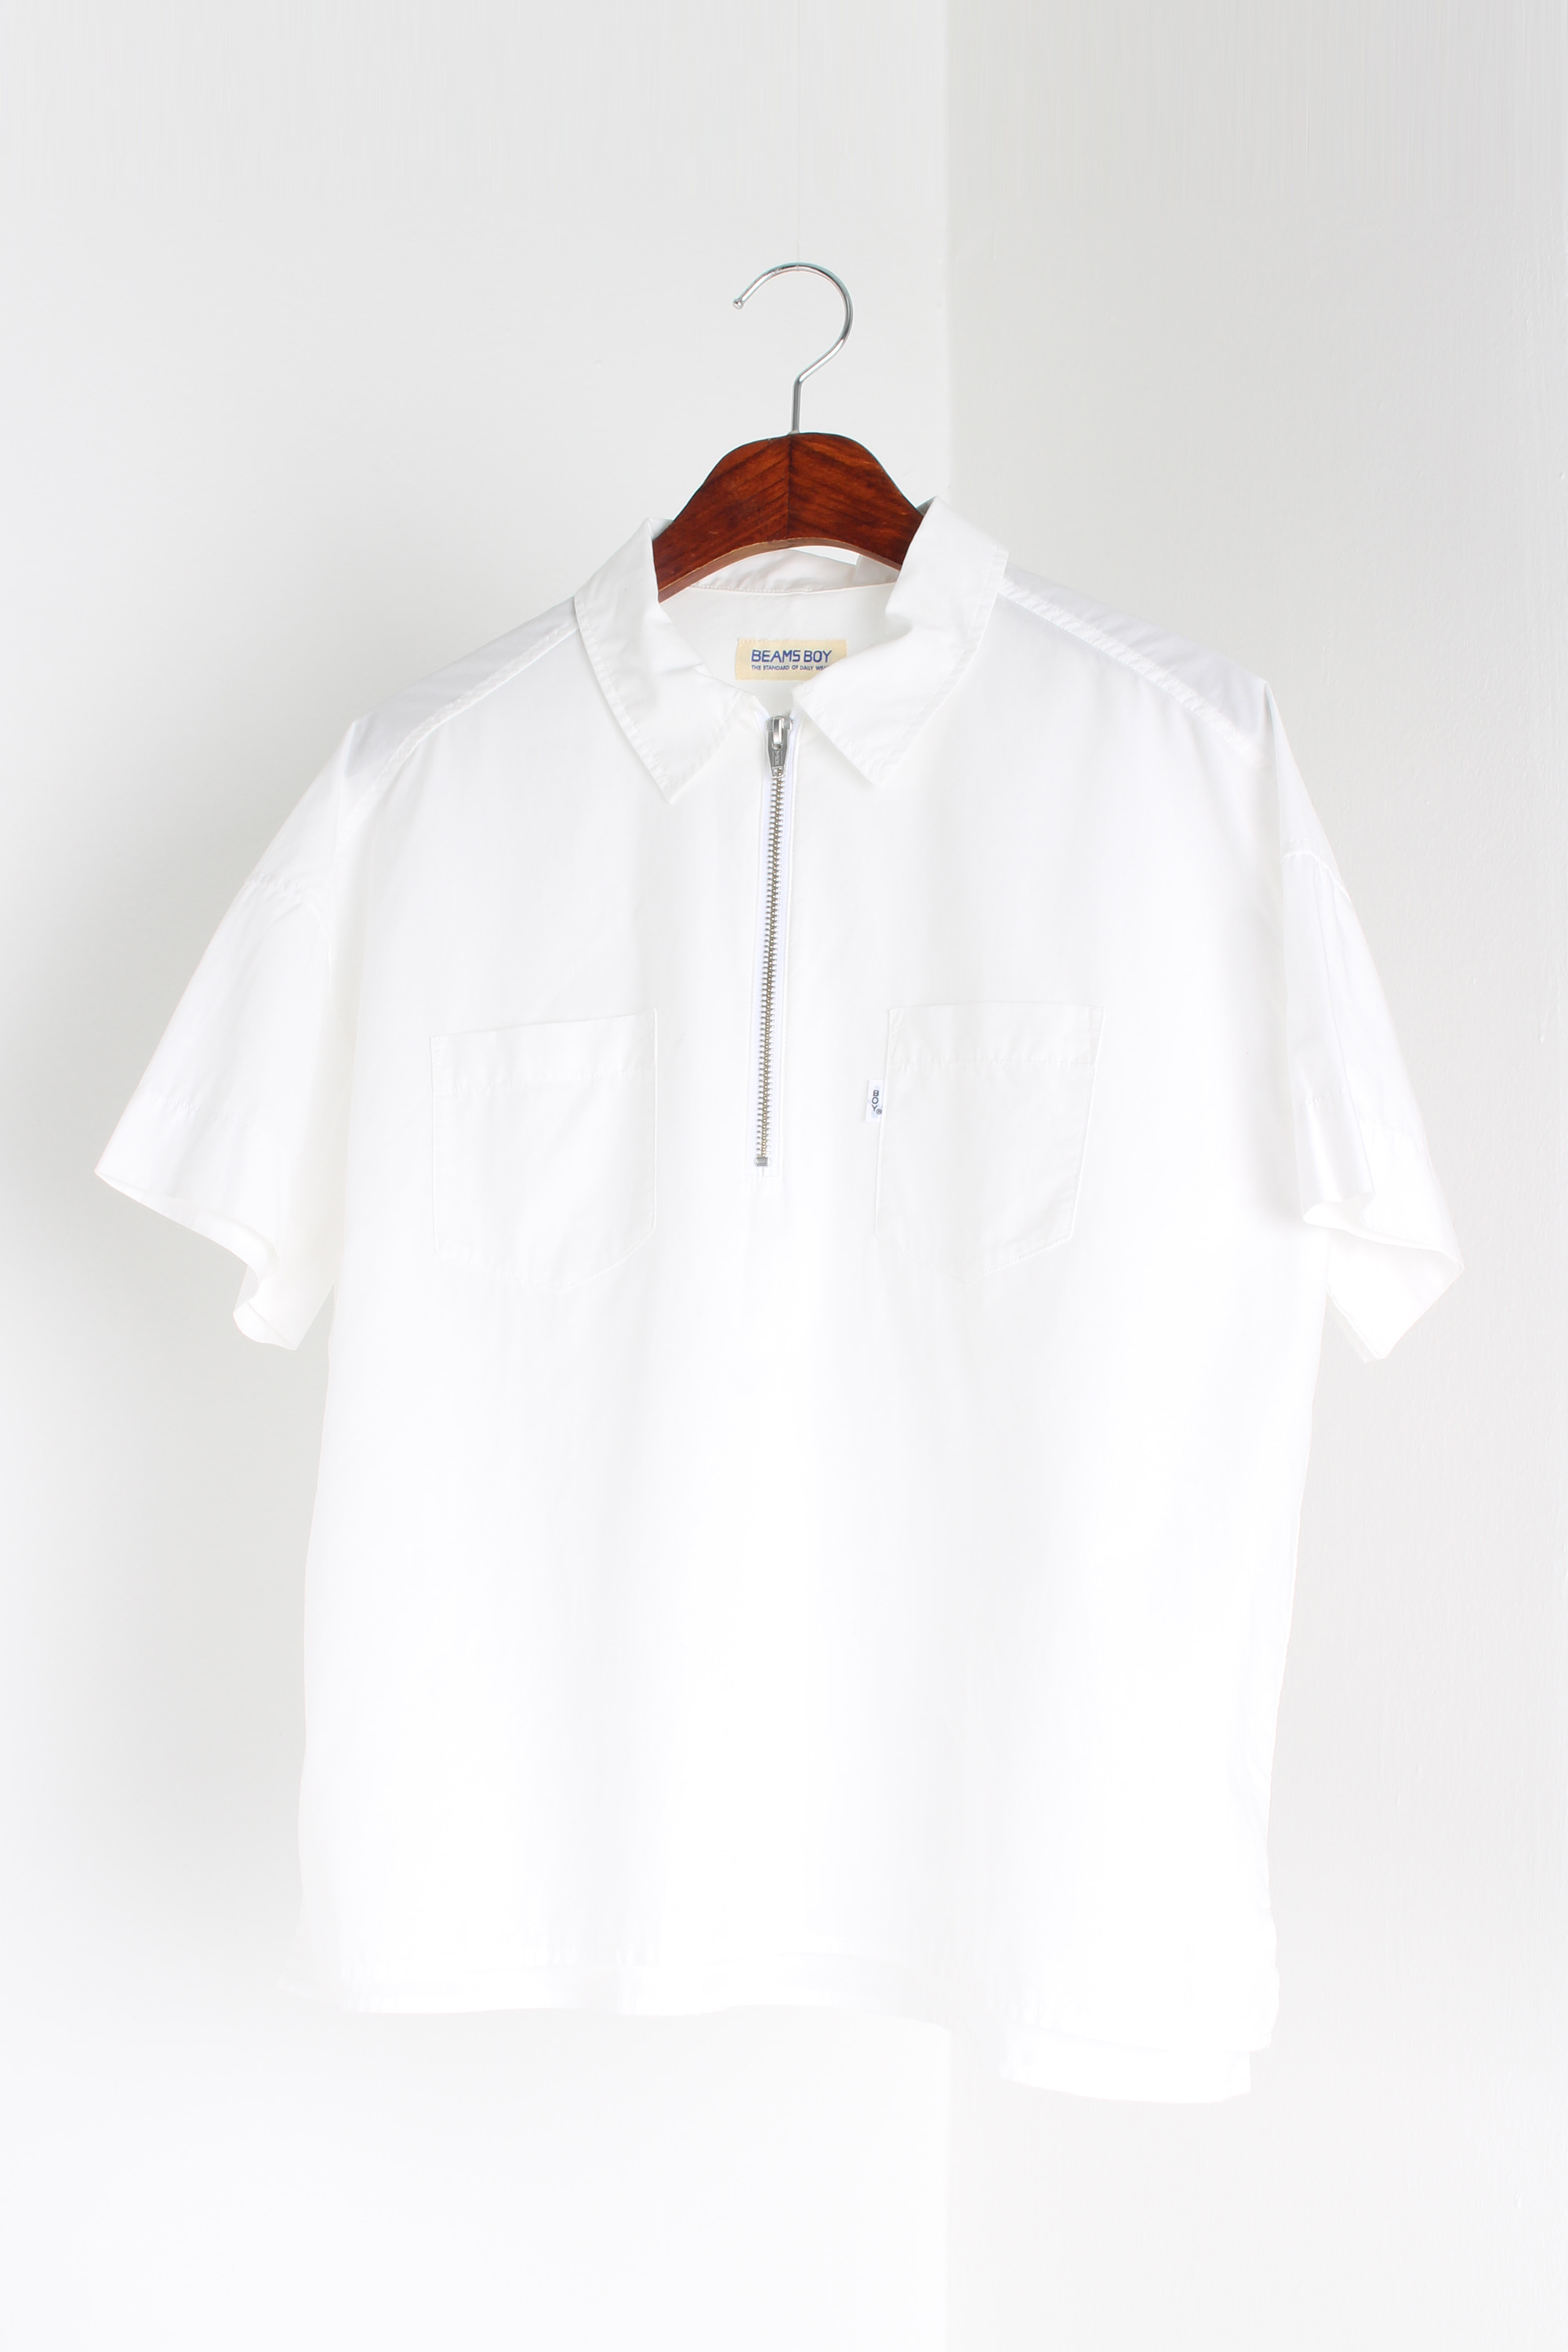 BEAMS BOY White Short Sleeve Shirts(FREE)